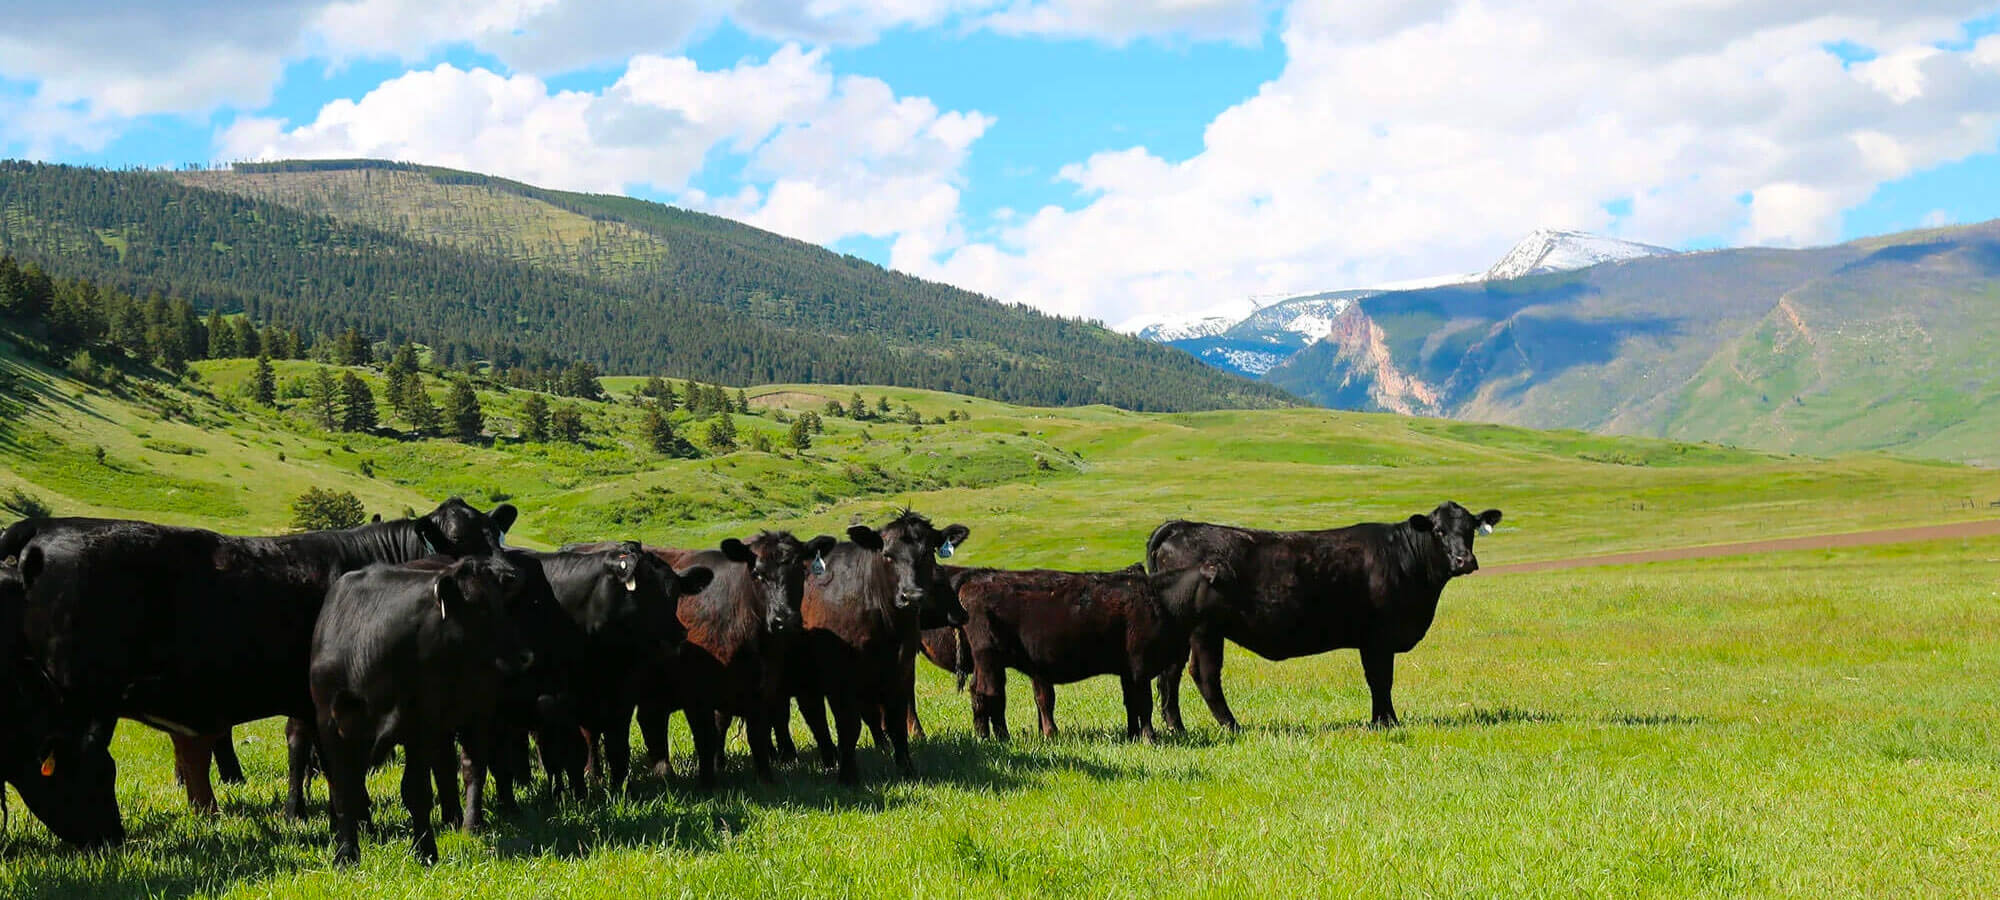 Hay Mama Pastured Raised Cattle Beef